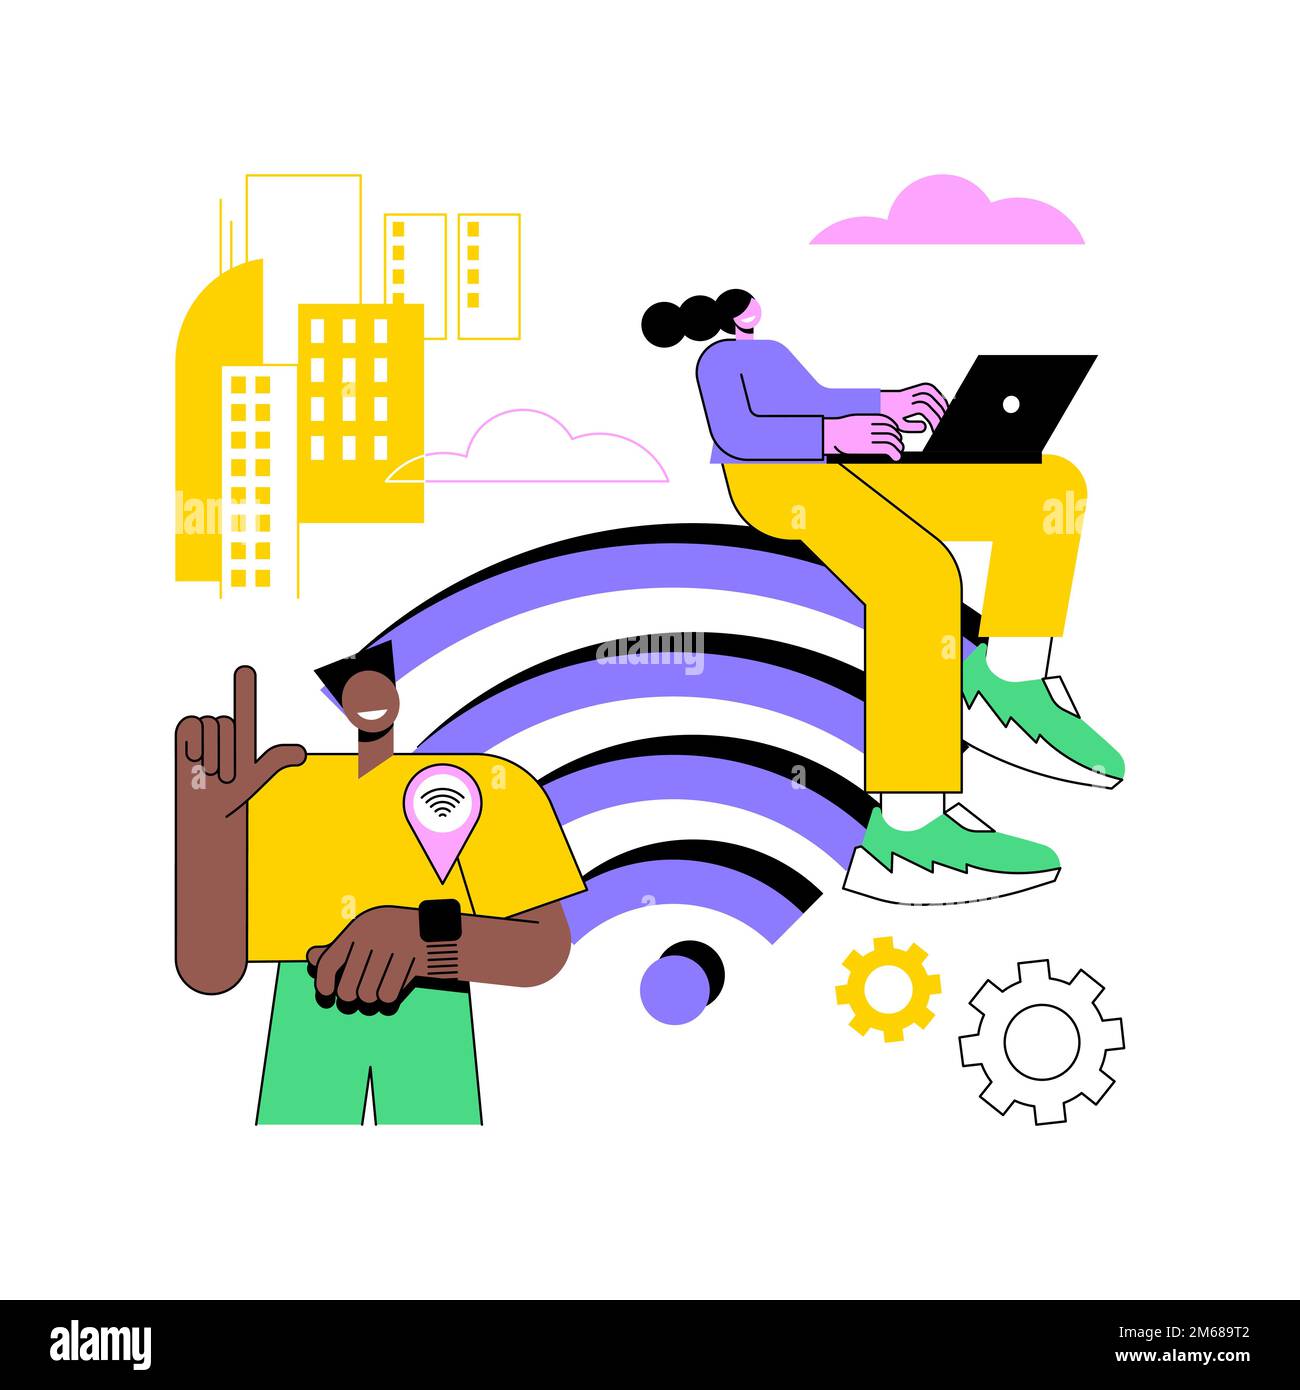 Public wi-fi hotspot abstract concept vector illustration. City center Wi-Fi, hotspot map, free wireless access, public open internet, network service Stock Vector